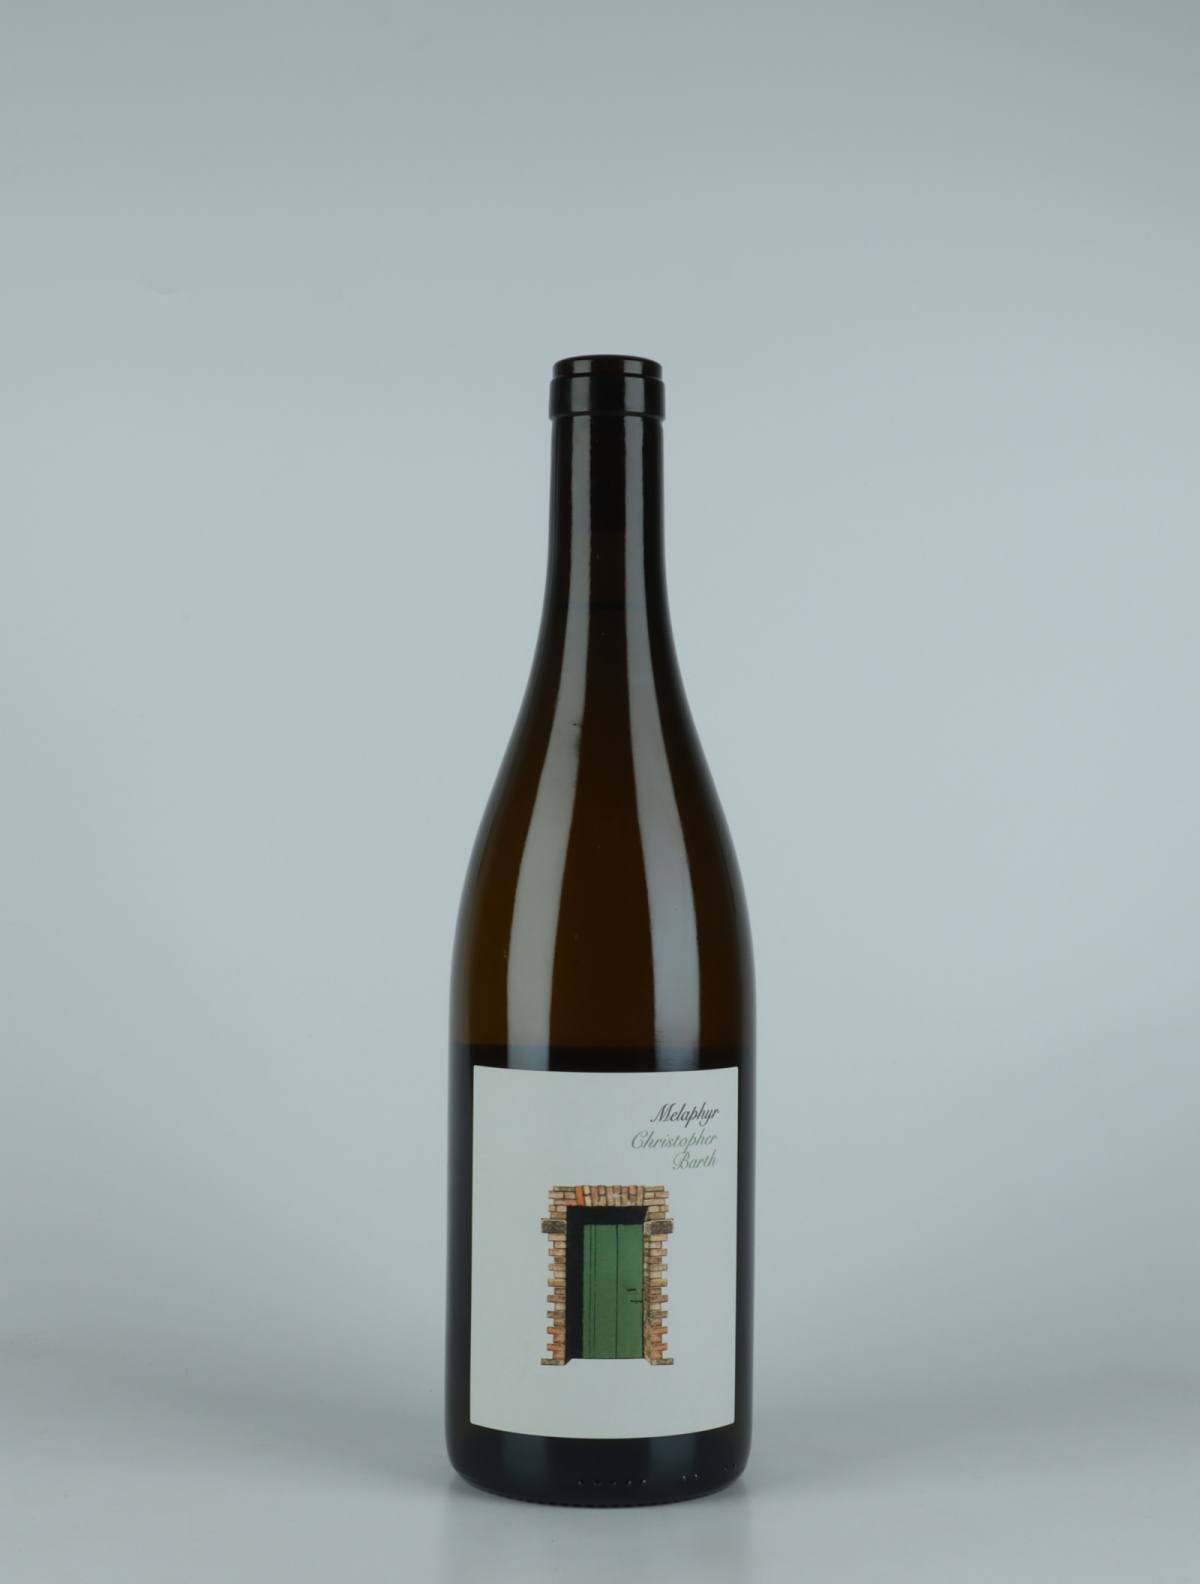 A bottle 2020 Melaphyr Riesling White wine from Christopher Barth, Rheinhessen in Germany